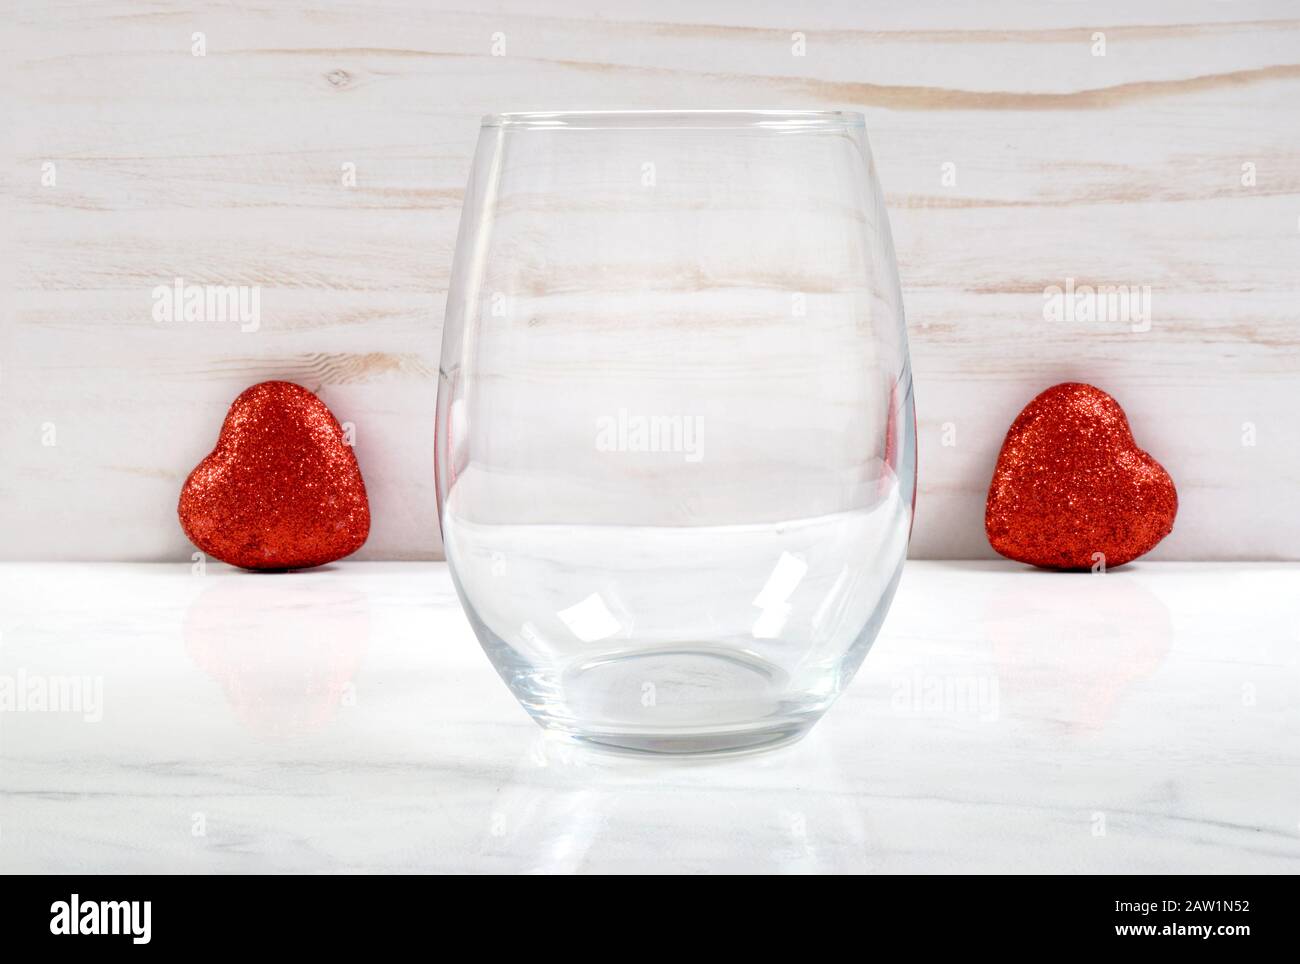 https://c8.alamy.com/comp/2AW1N52/no-stem-wine-glass-mockup-with-red-valentine-hearts-2AW1N52.jpg